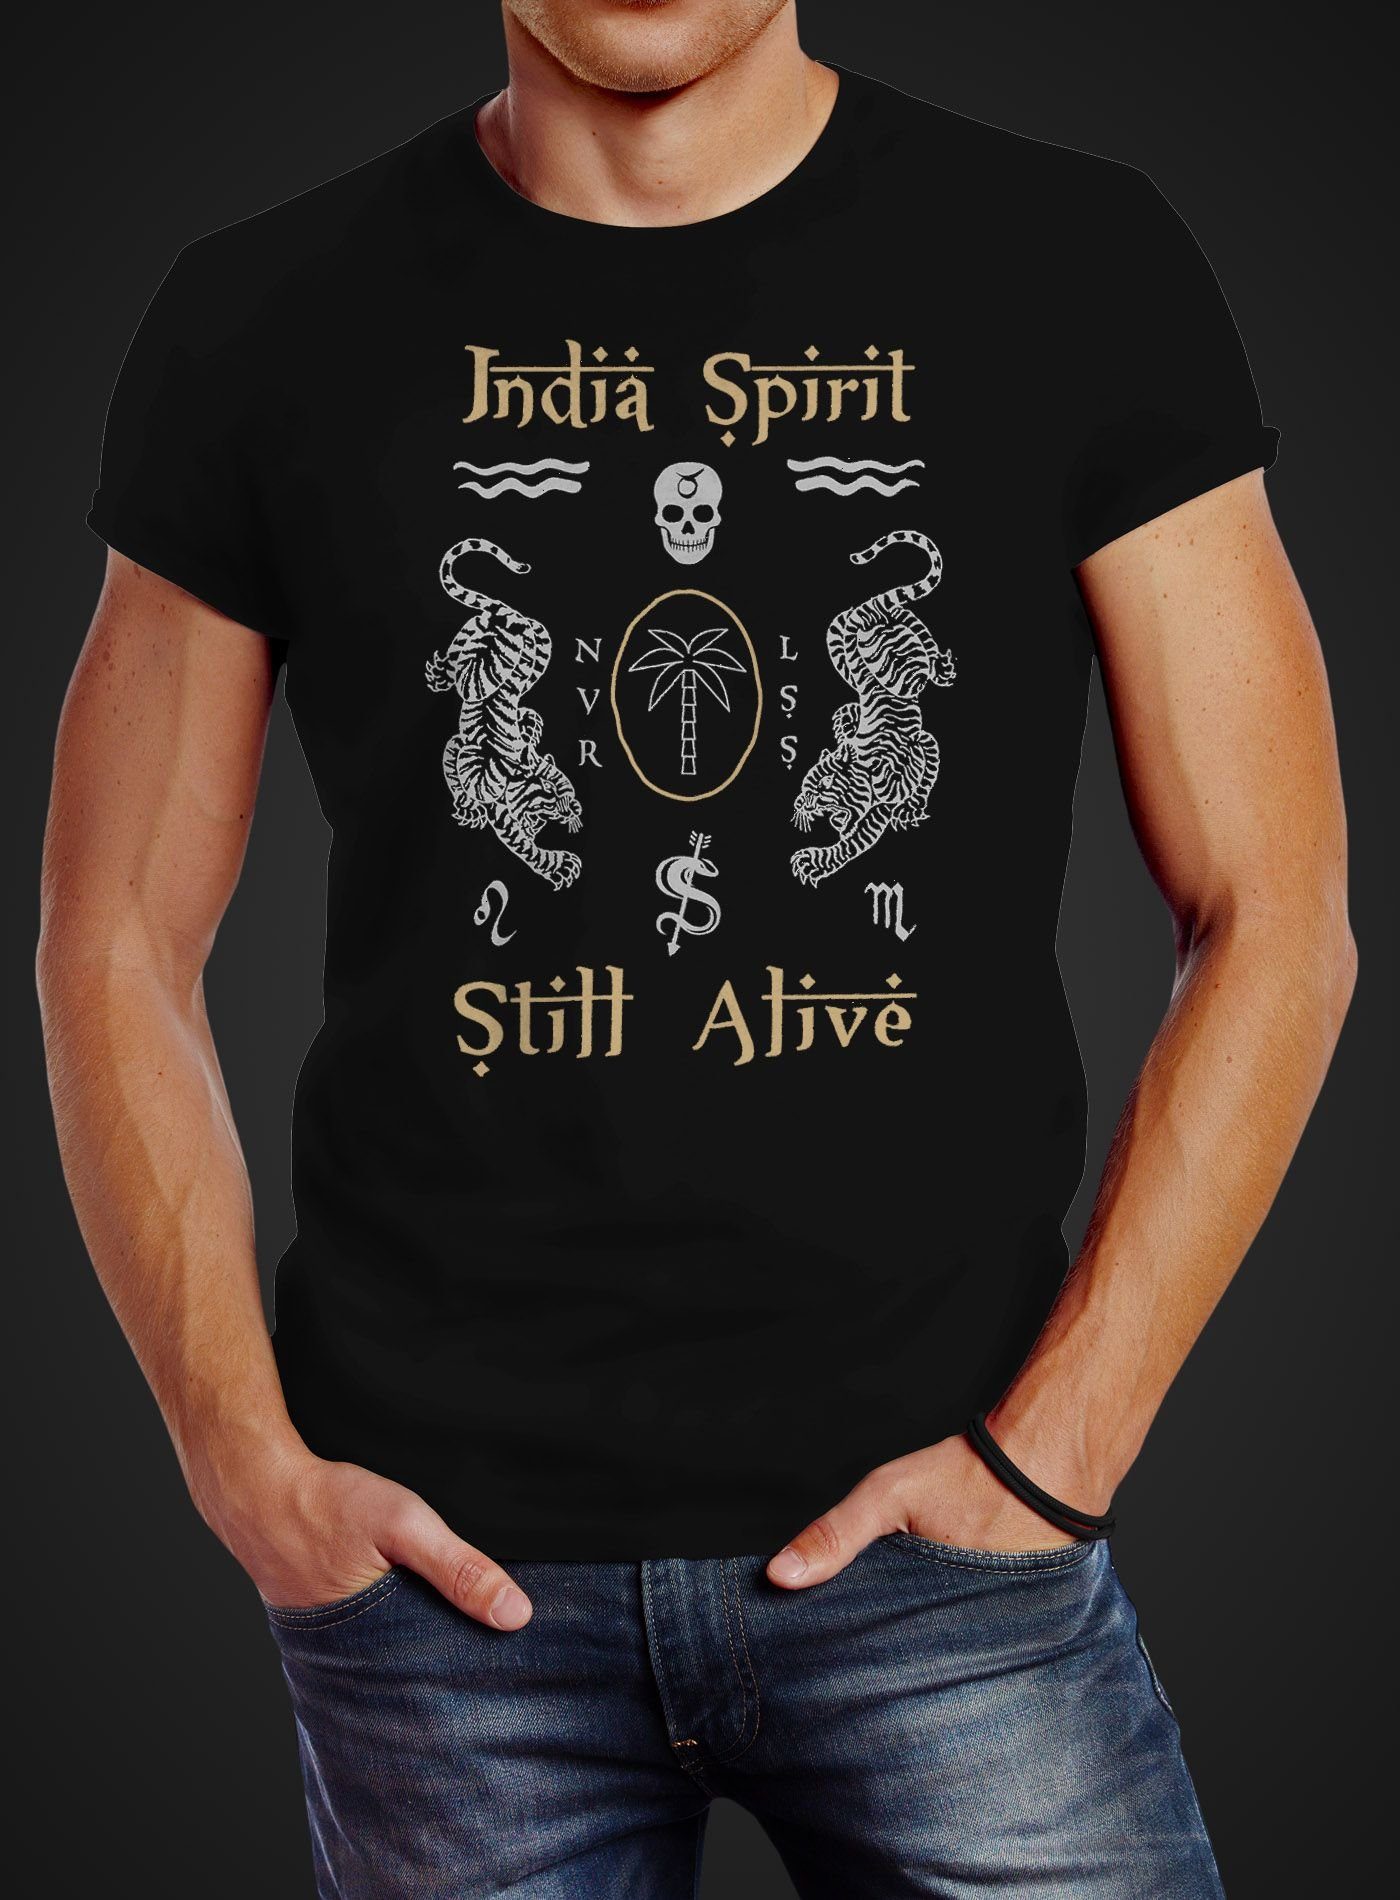 Neverless Print-Shirt Neverless® Herren T-Shirt Motiv Spirit Indien Totenkopf India Streetstyle mit Schriftzug schwarz Print Tiger Fashion